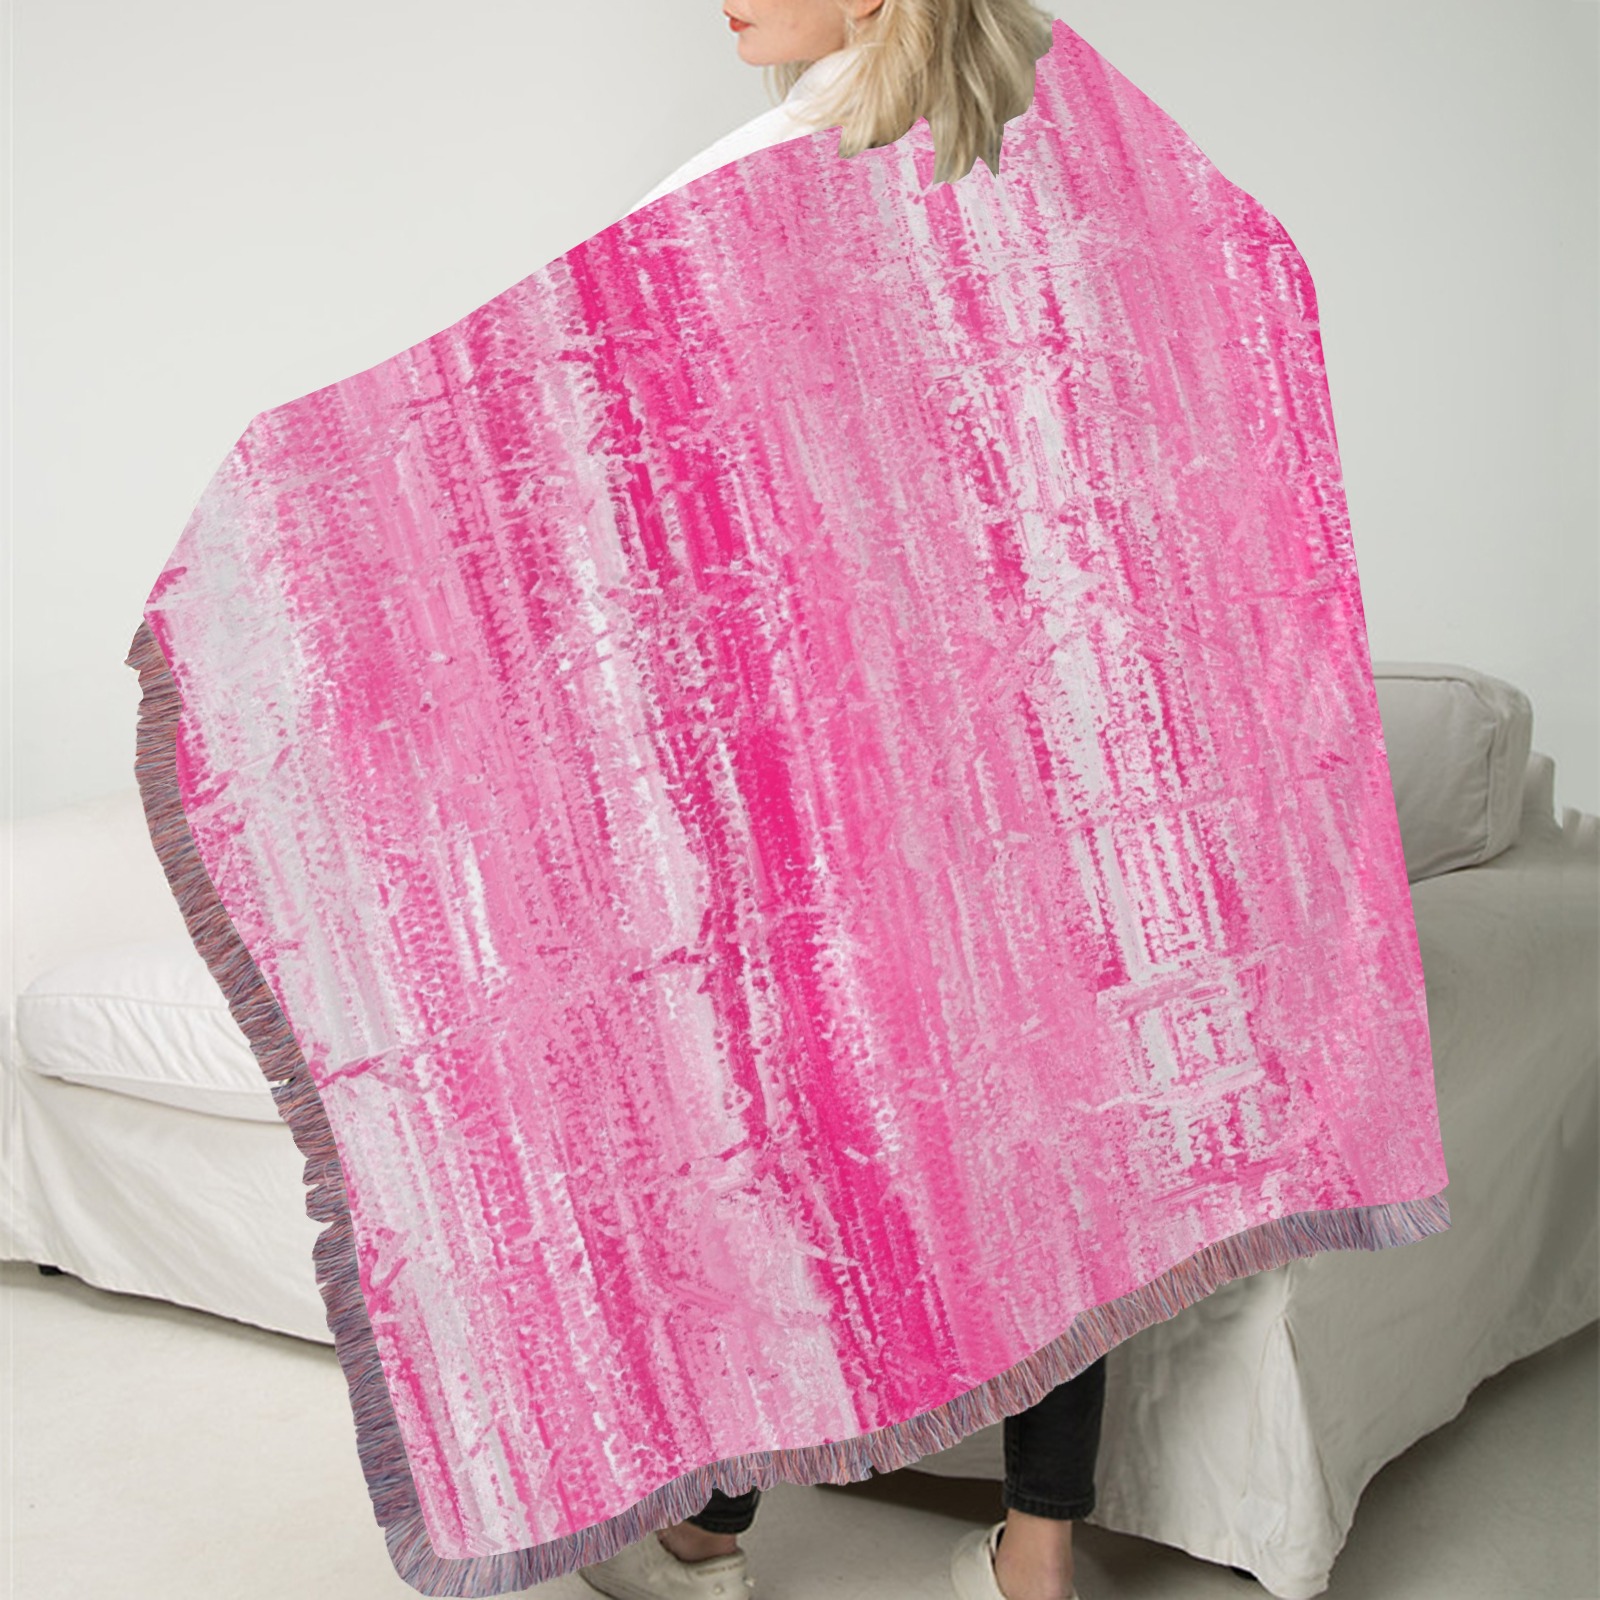 confetti 12 Ultra-Soft Fringe Blanket 50"x60" (Mixed Pink)